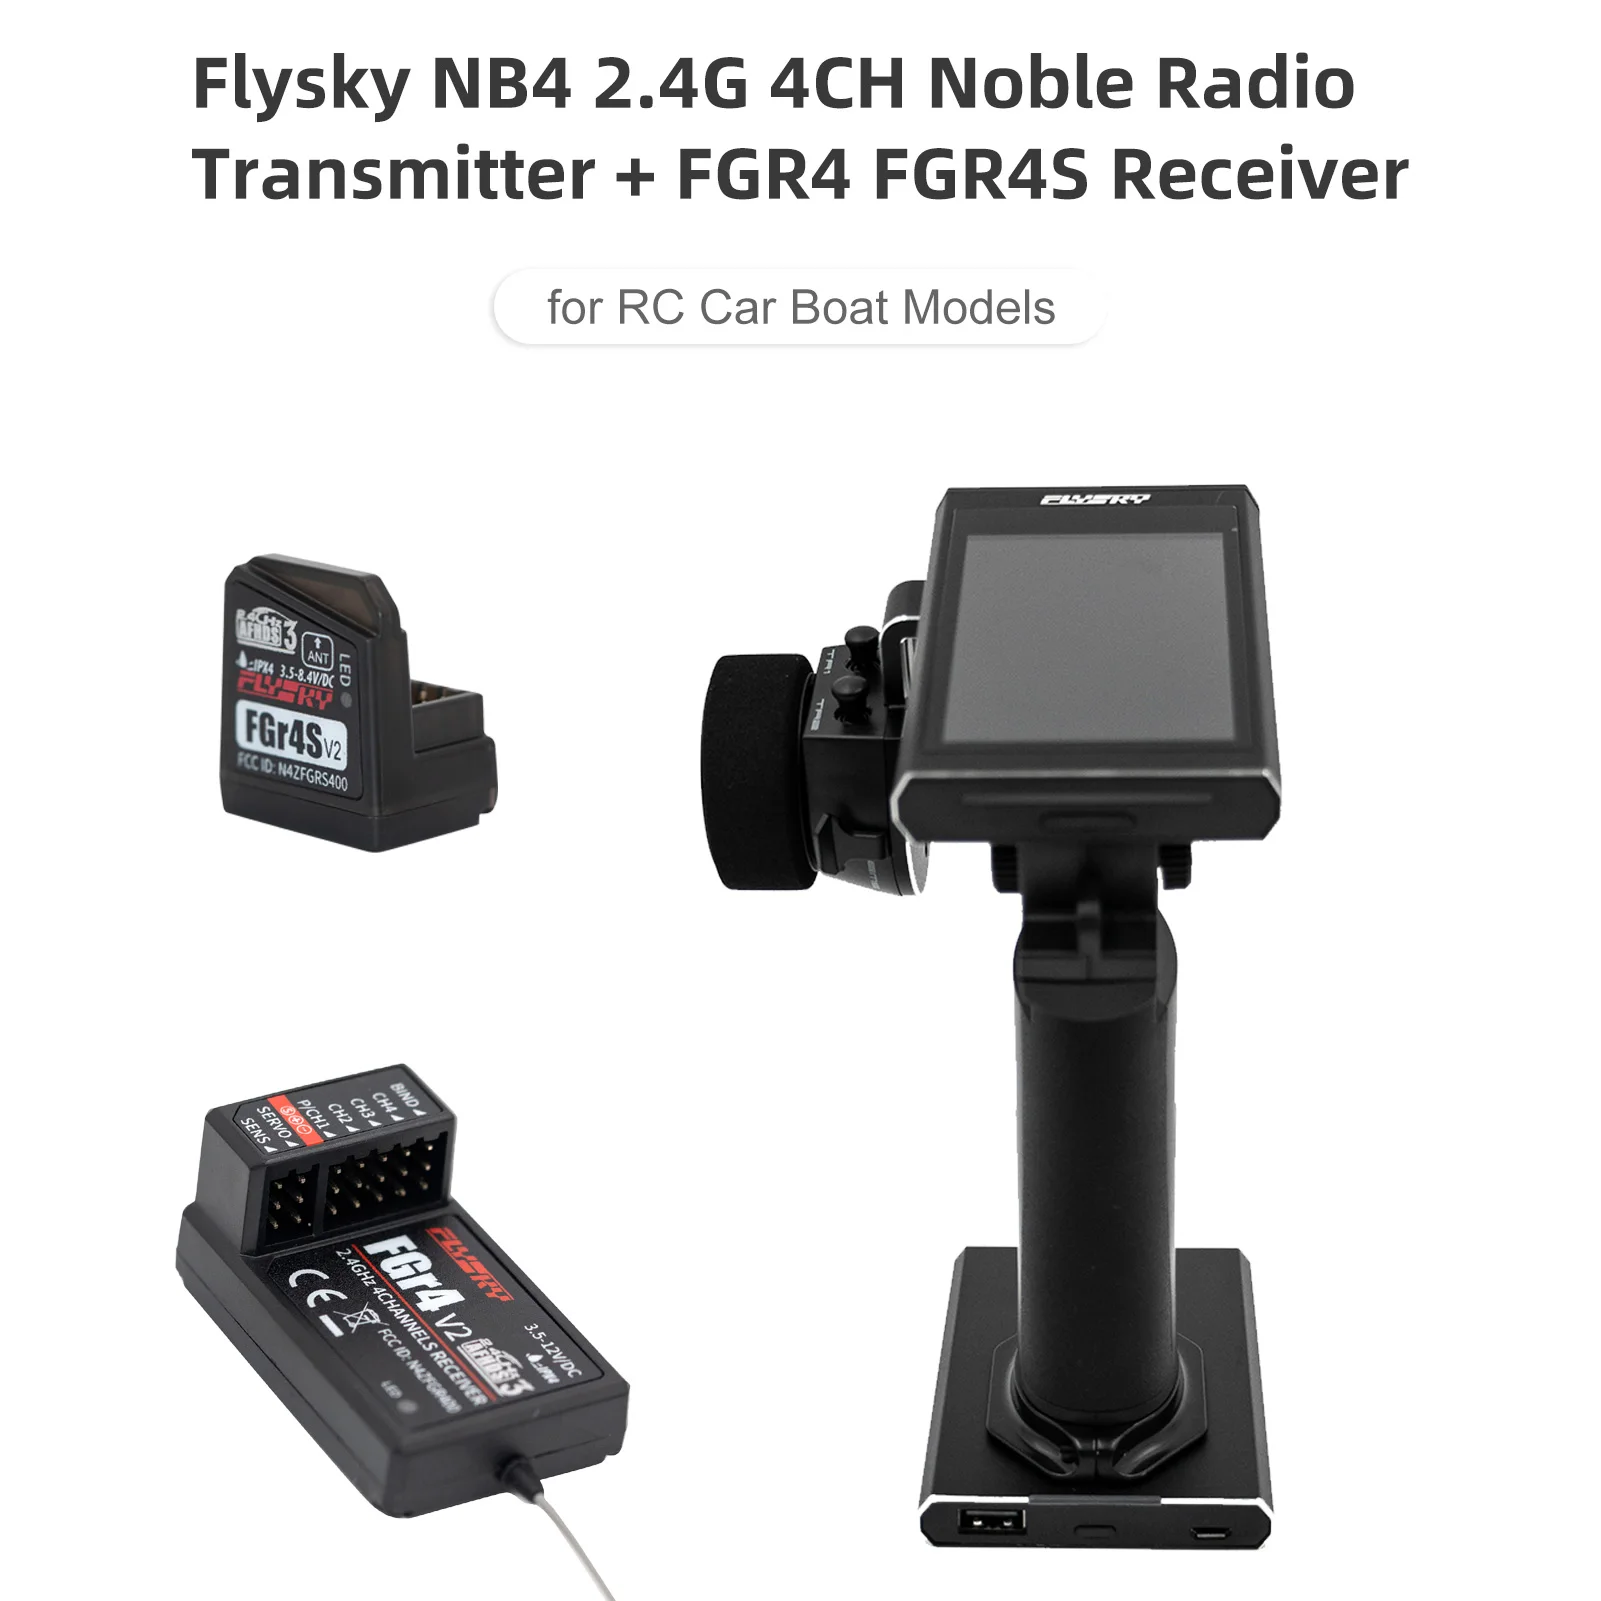 

Flysky Noble NB4 2.4G 4CH Radio Transmitter Remote Controller with FGR4 FGR4S Receiver AFHDS 3 Protocol for RC Car Boat Models